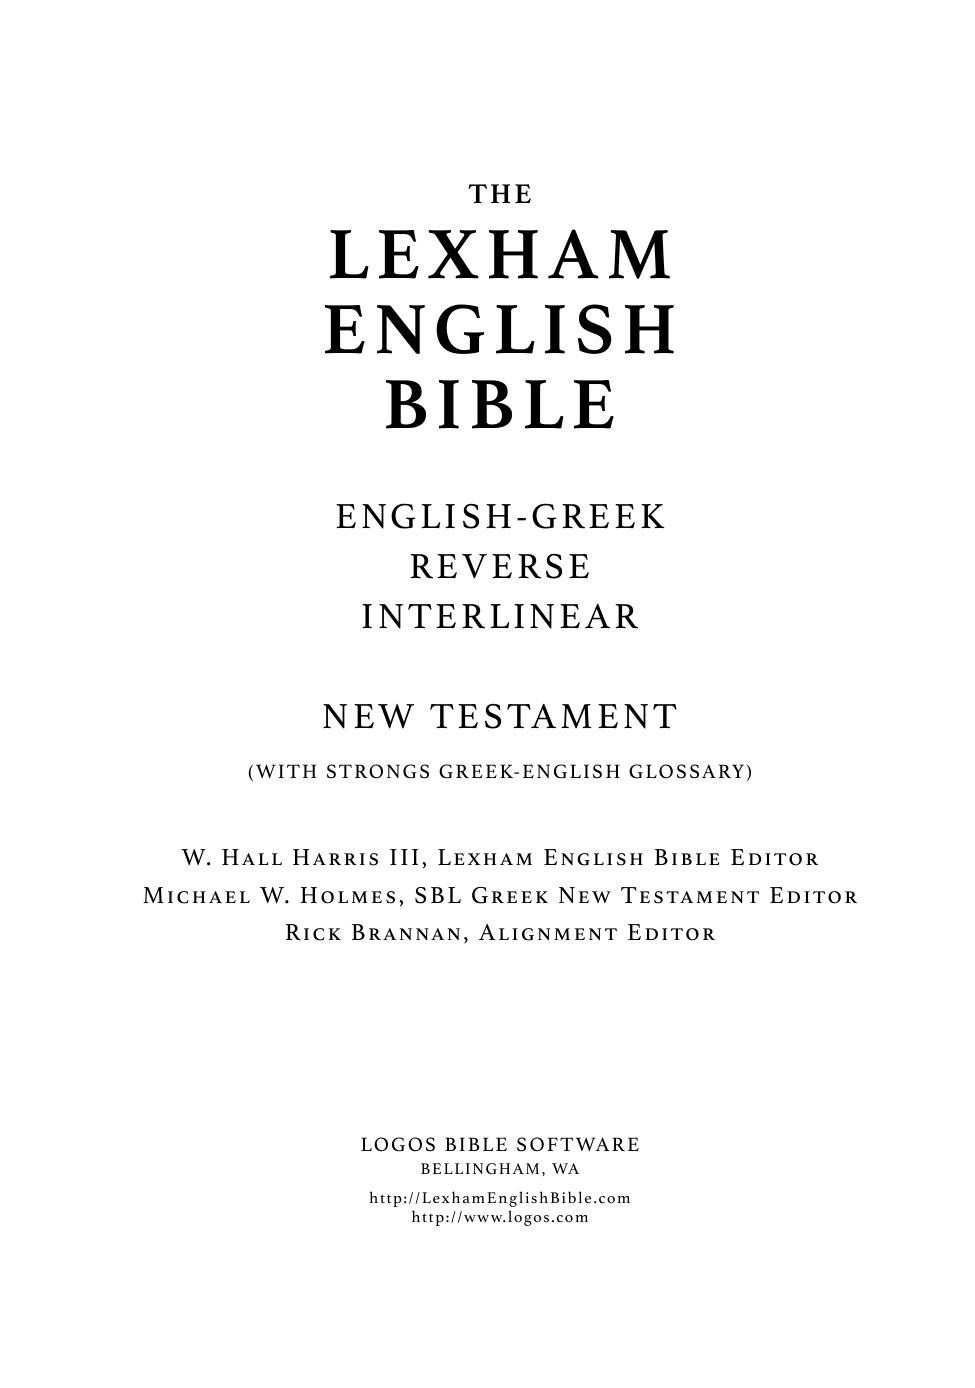 The Lexham English Bible (Interlinear)